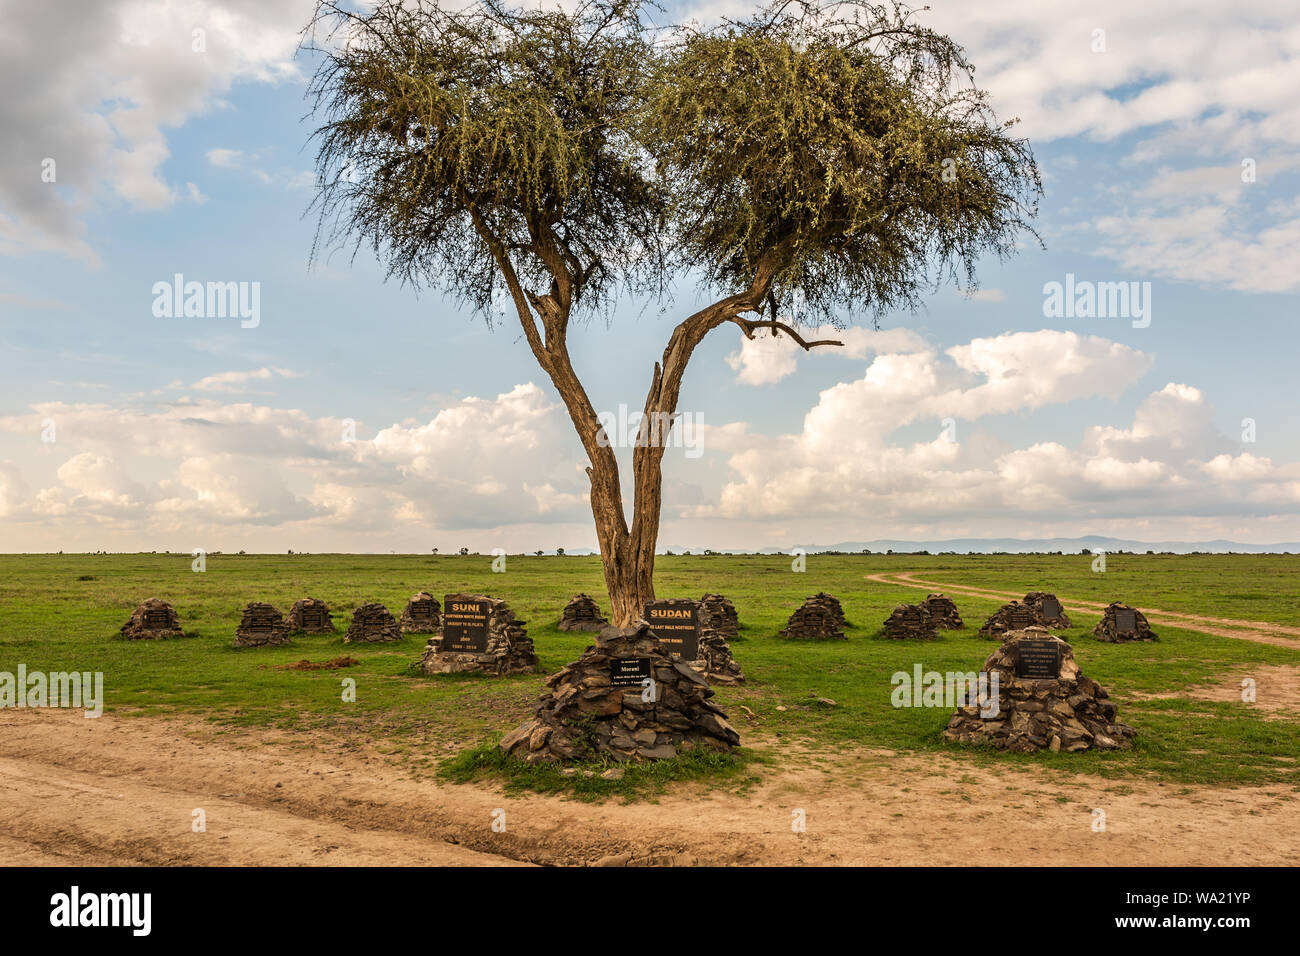 Ol Pejeta Conservancy, Laikipia County, Kenia - Juni 12., 2019: Landschaft Foto einer Rhino Memorial, ehrt die Leben aller Ol Pejeta Stockfoto